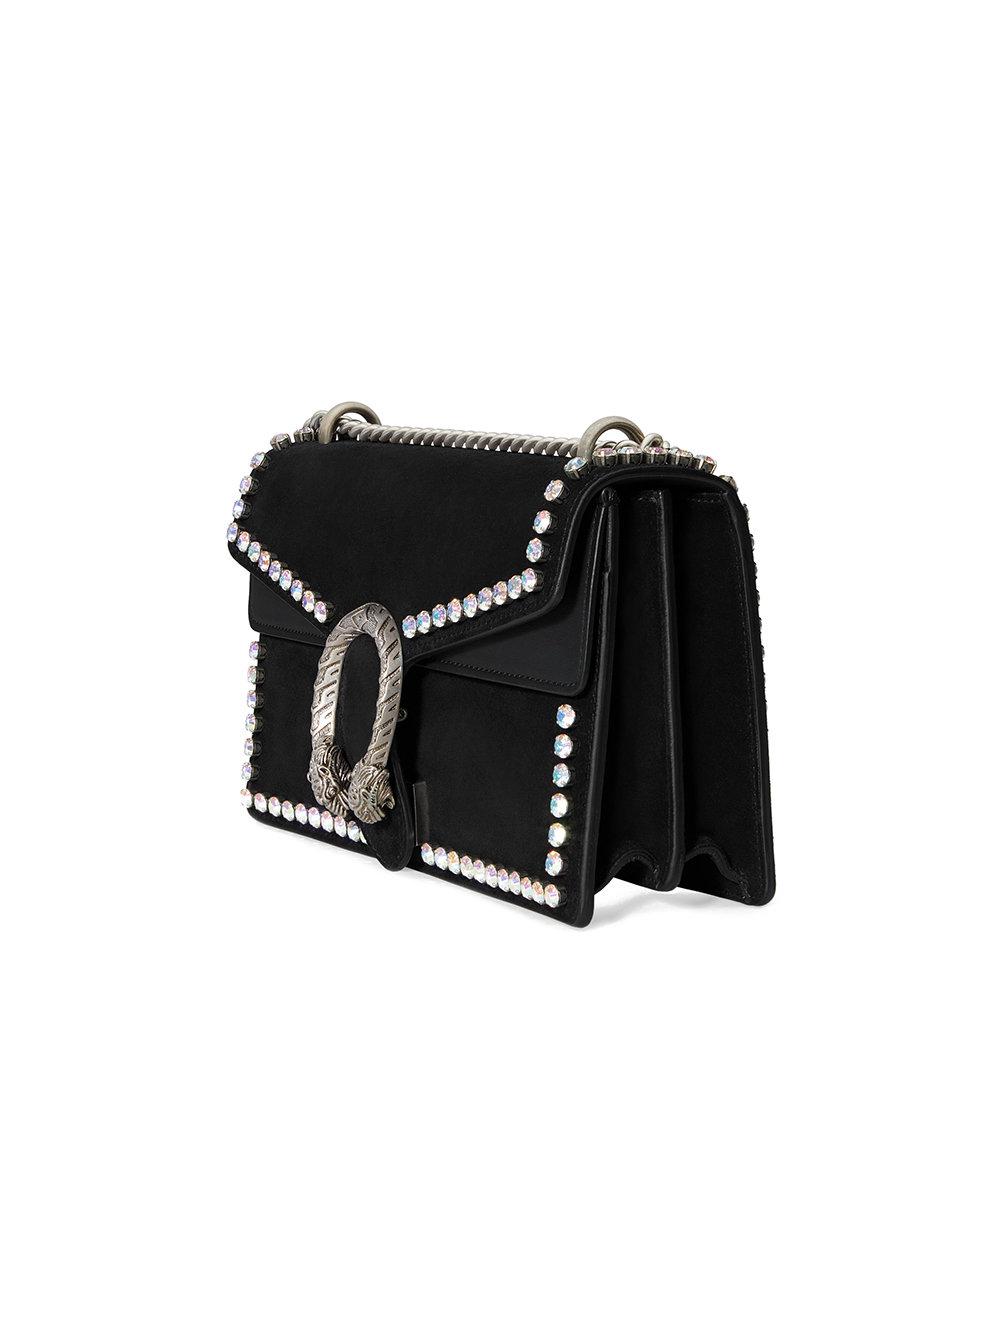 Gucci Dionysus Suede Shoulder Bag With Crystals in Black - Lyst